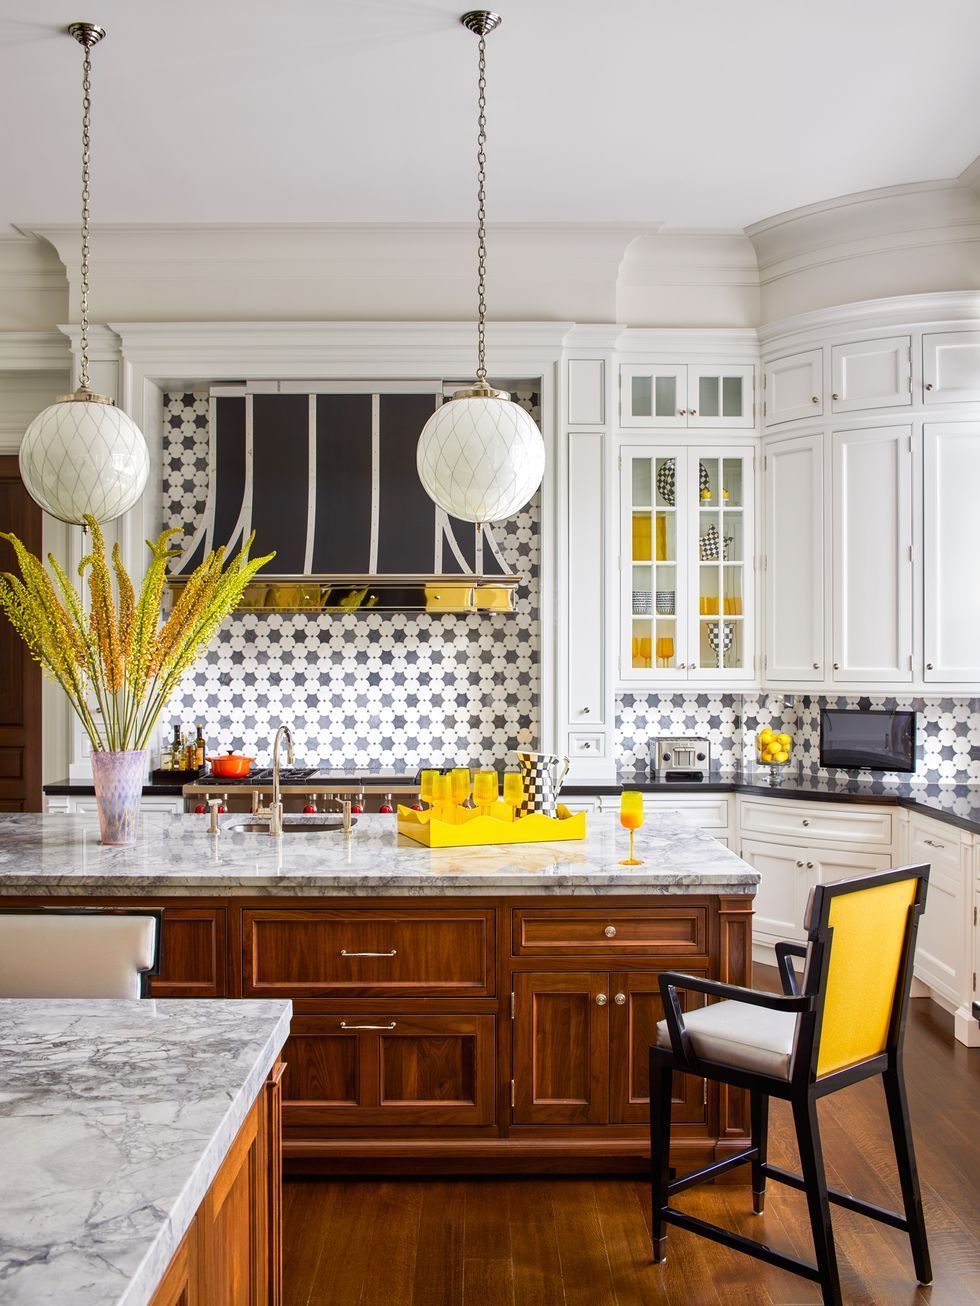 18 Gorgeous Kitchen Backsplash Ideas   Best Kitchen Tile Ideas